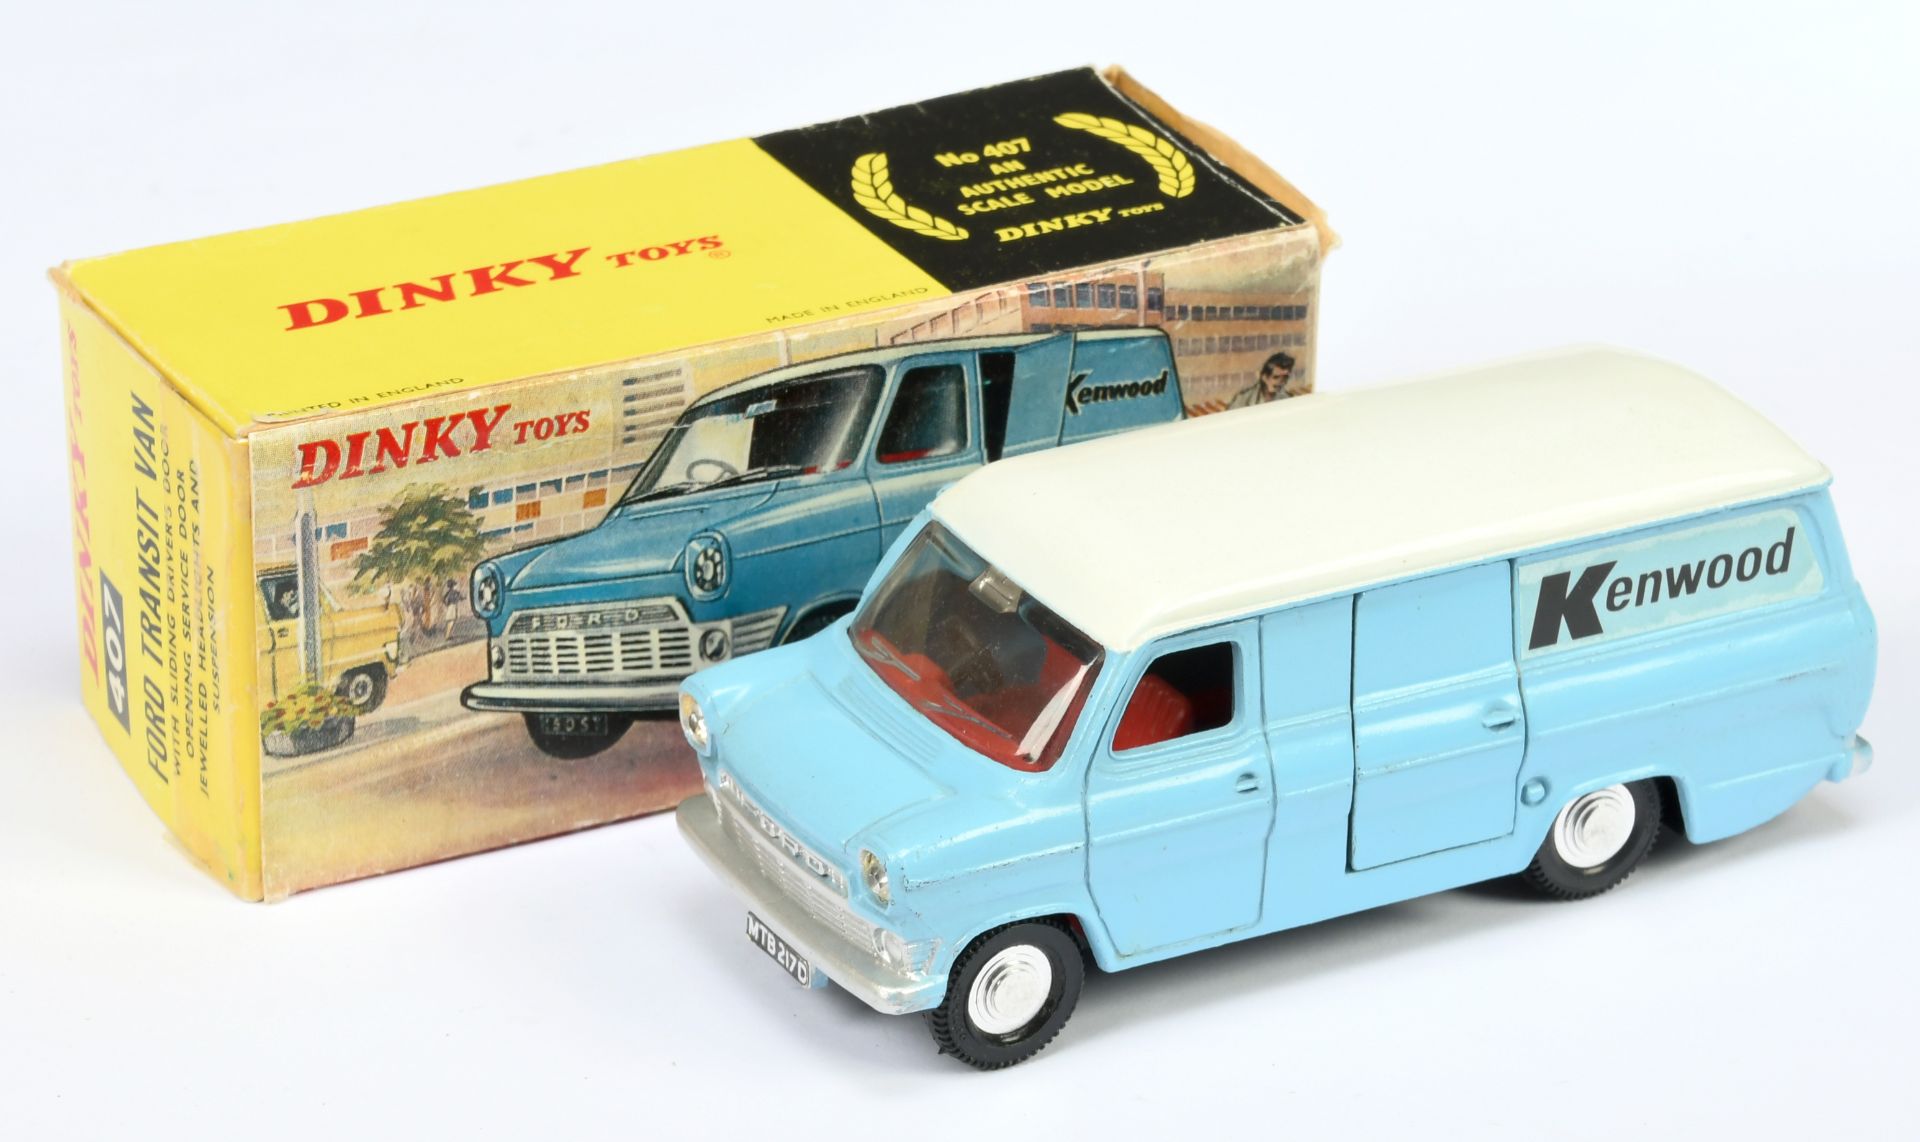 Dinky Toys 407 Ford transit van "Kenwood" - light blue body, white roof, dark grey base, red inte...